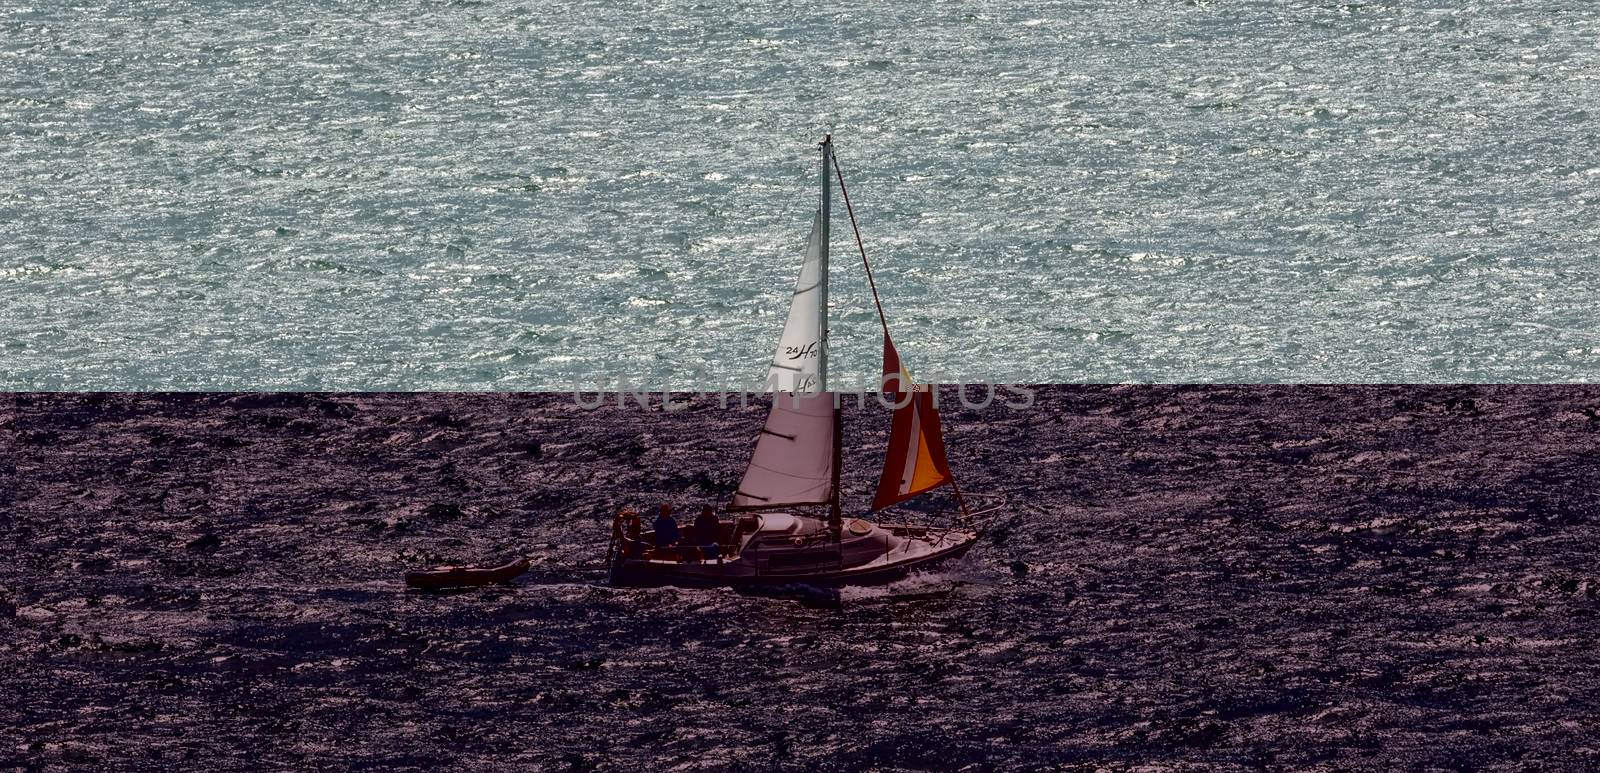 Portland Harbor, UK - July 2, 2020: White sailboat sailing in the harbor. by DamantisZ